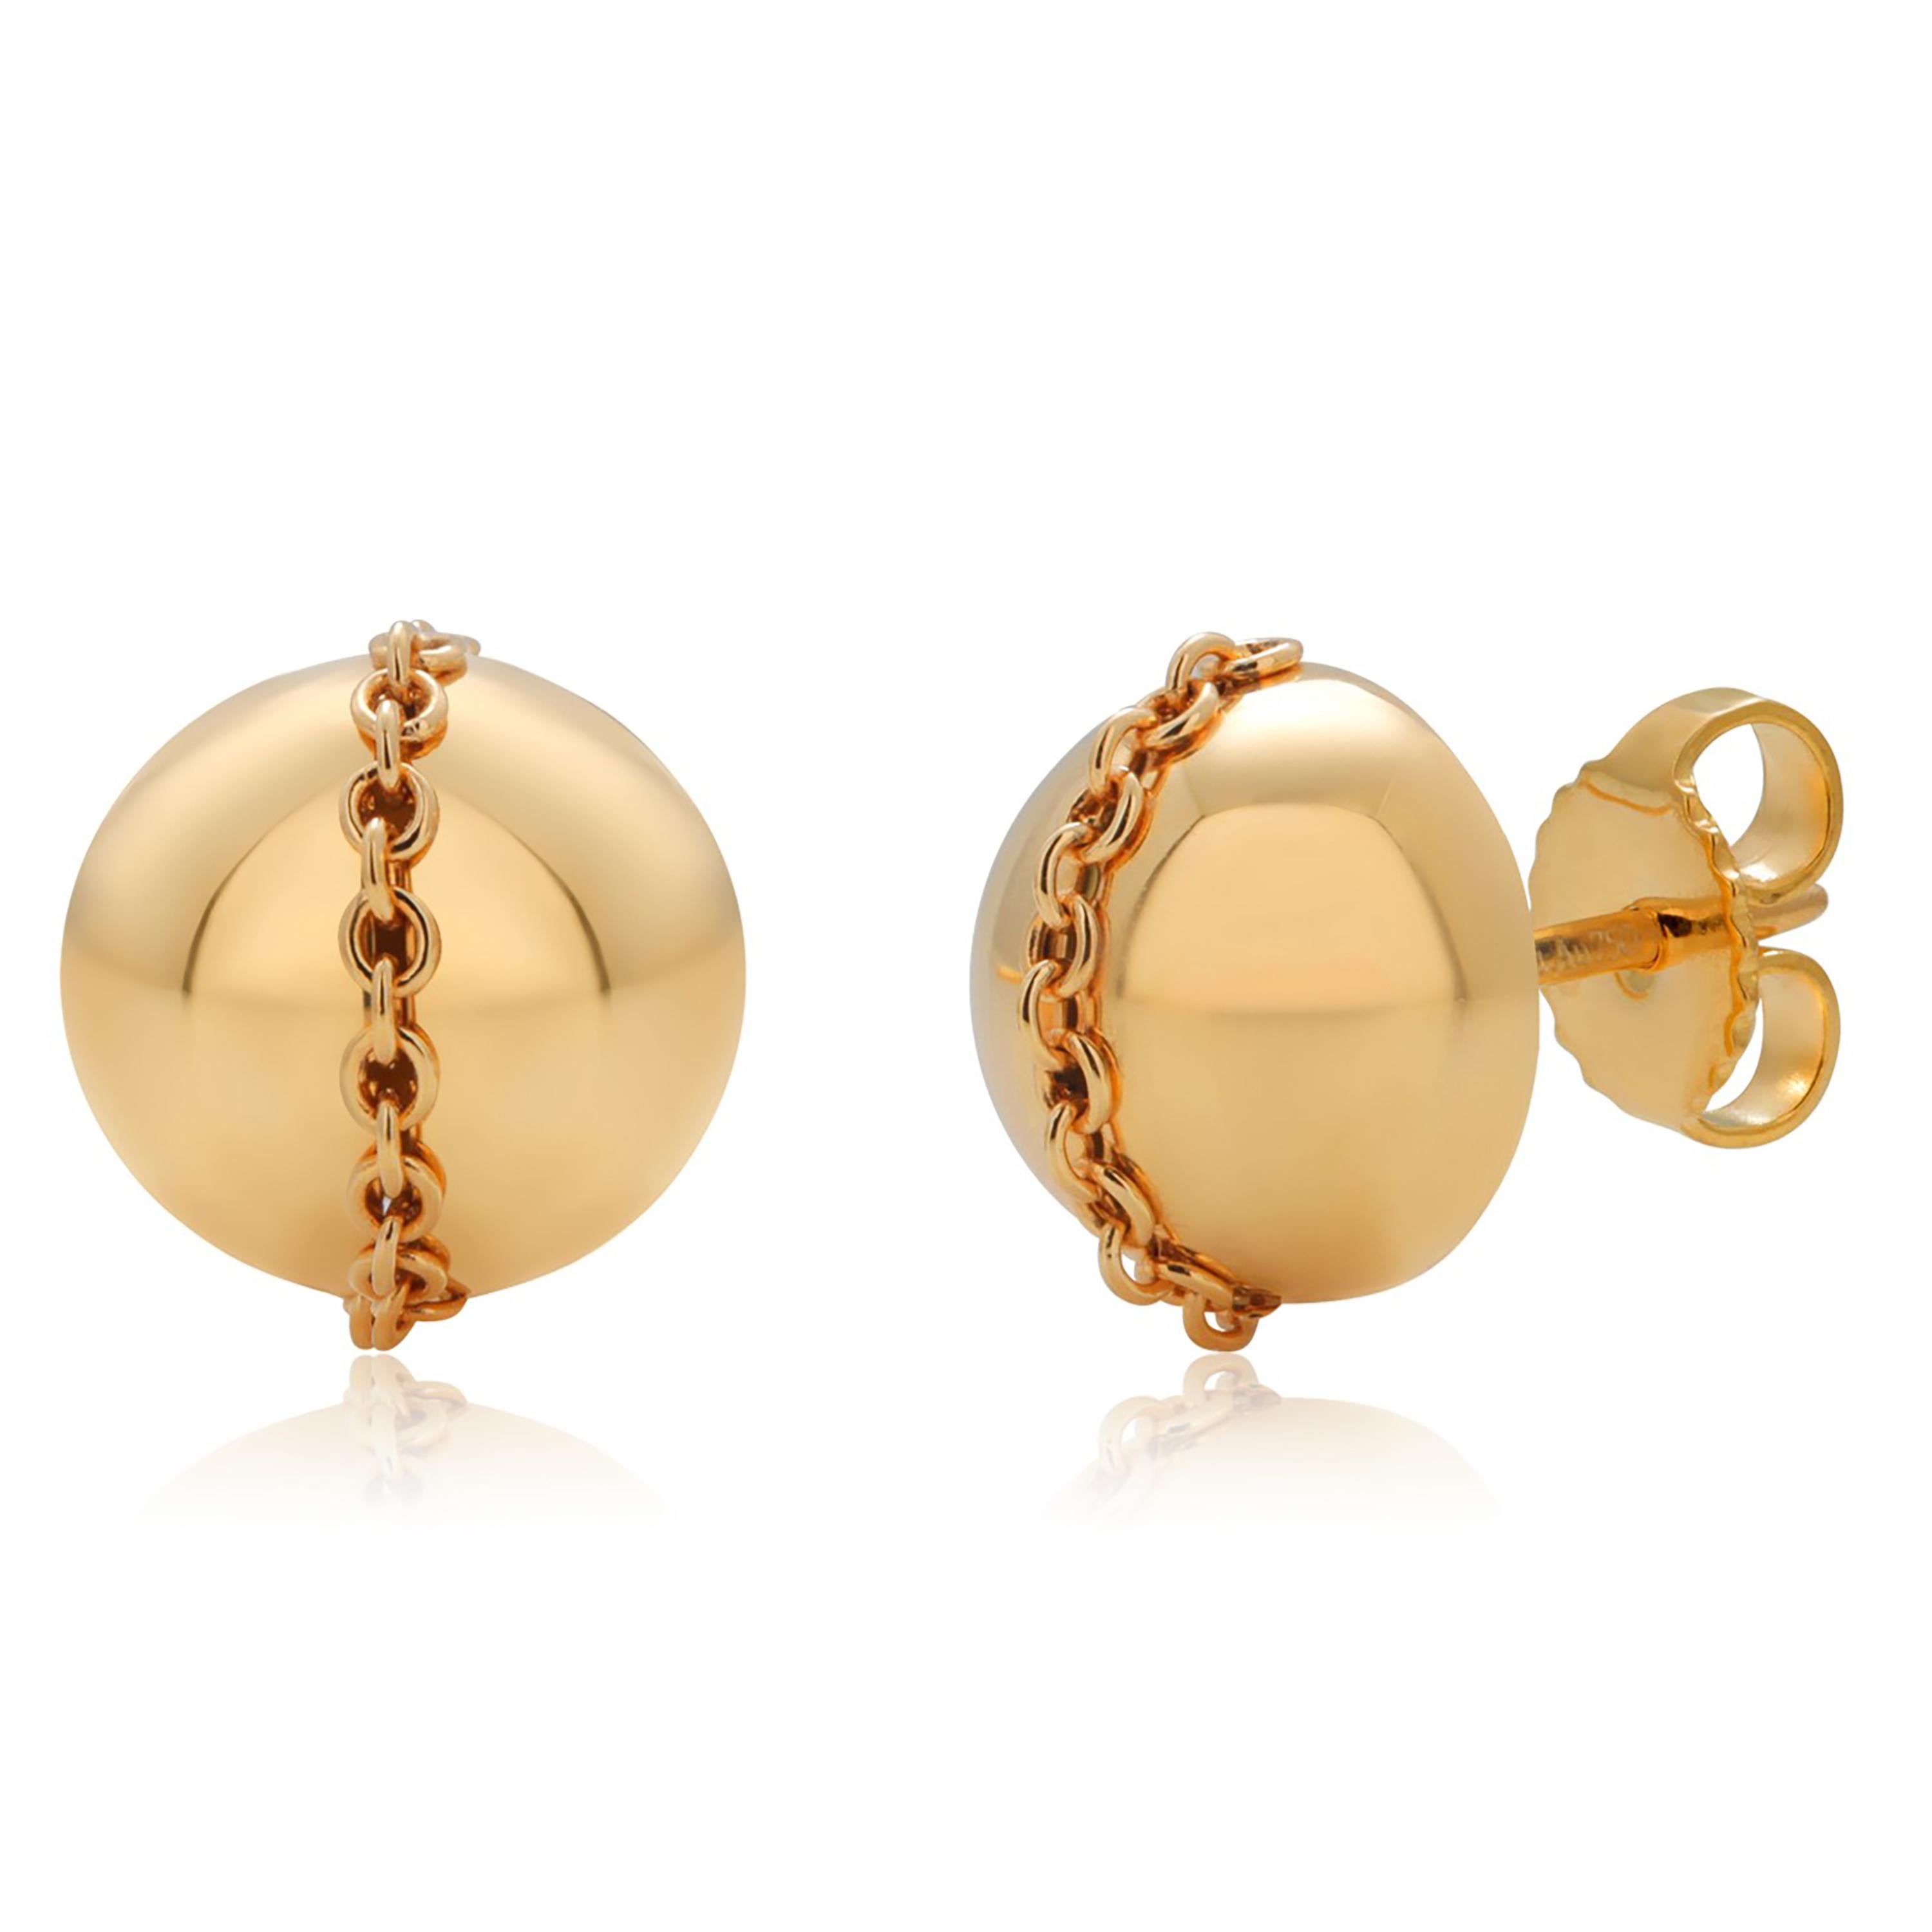 Contemporary Tiffany Co. 18 Karat Yellow Gold HardWear Ball Linked Chain 0.40 Inch Earrings